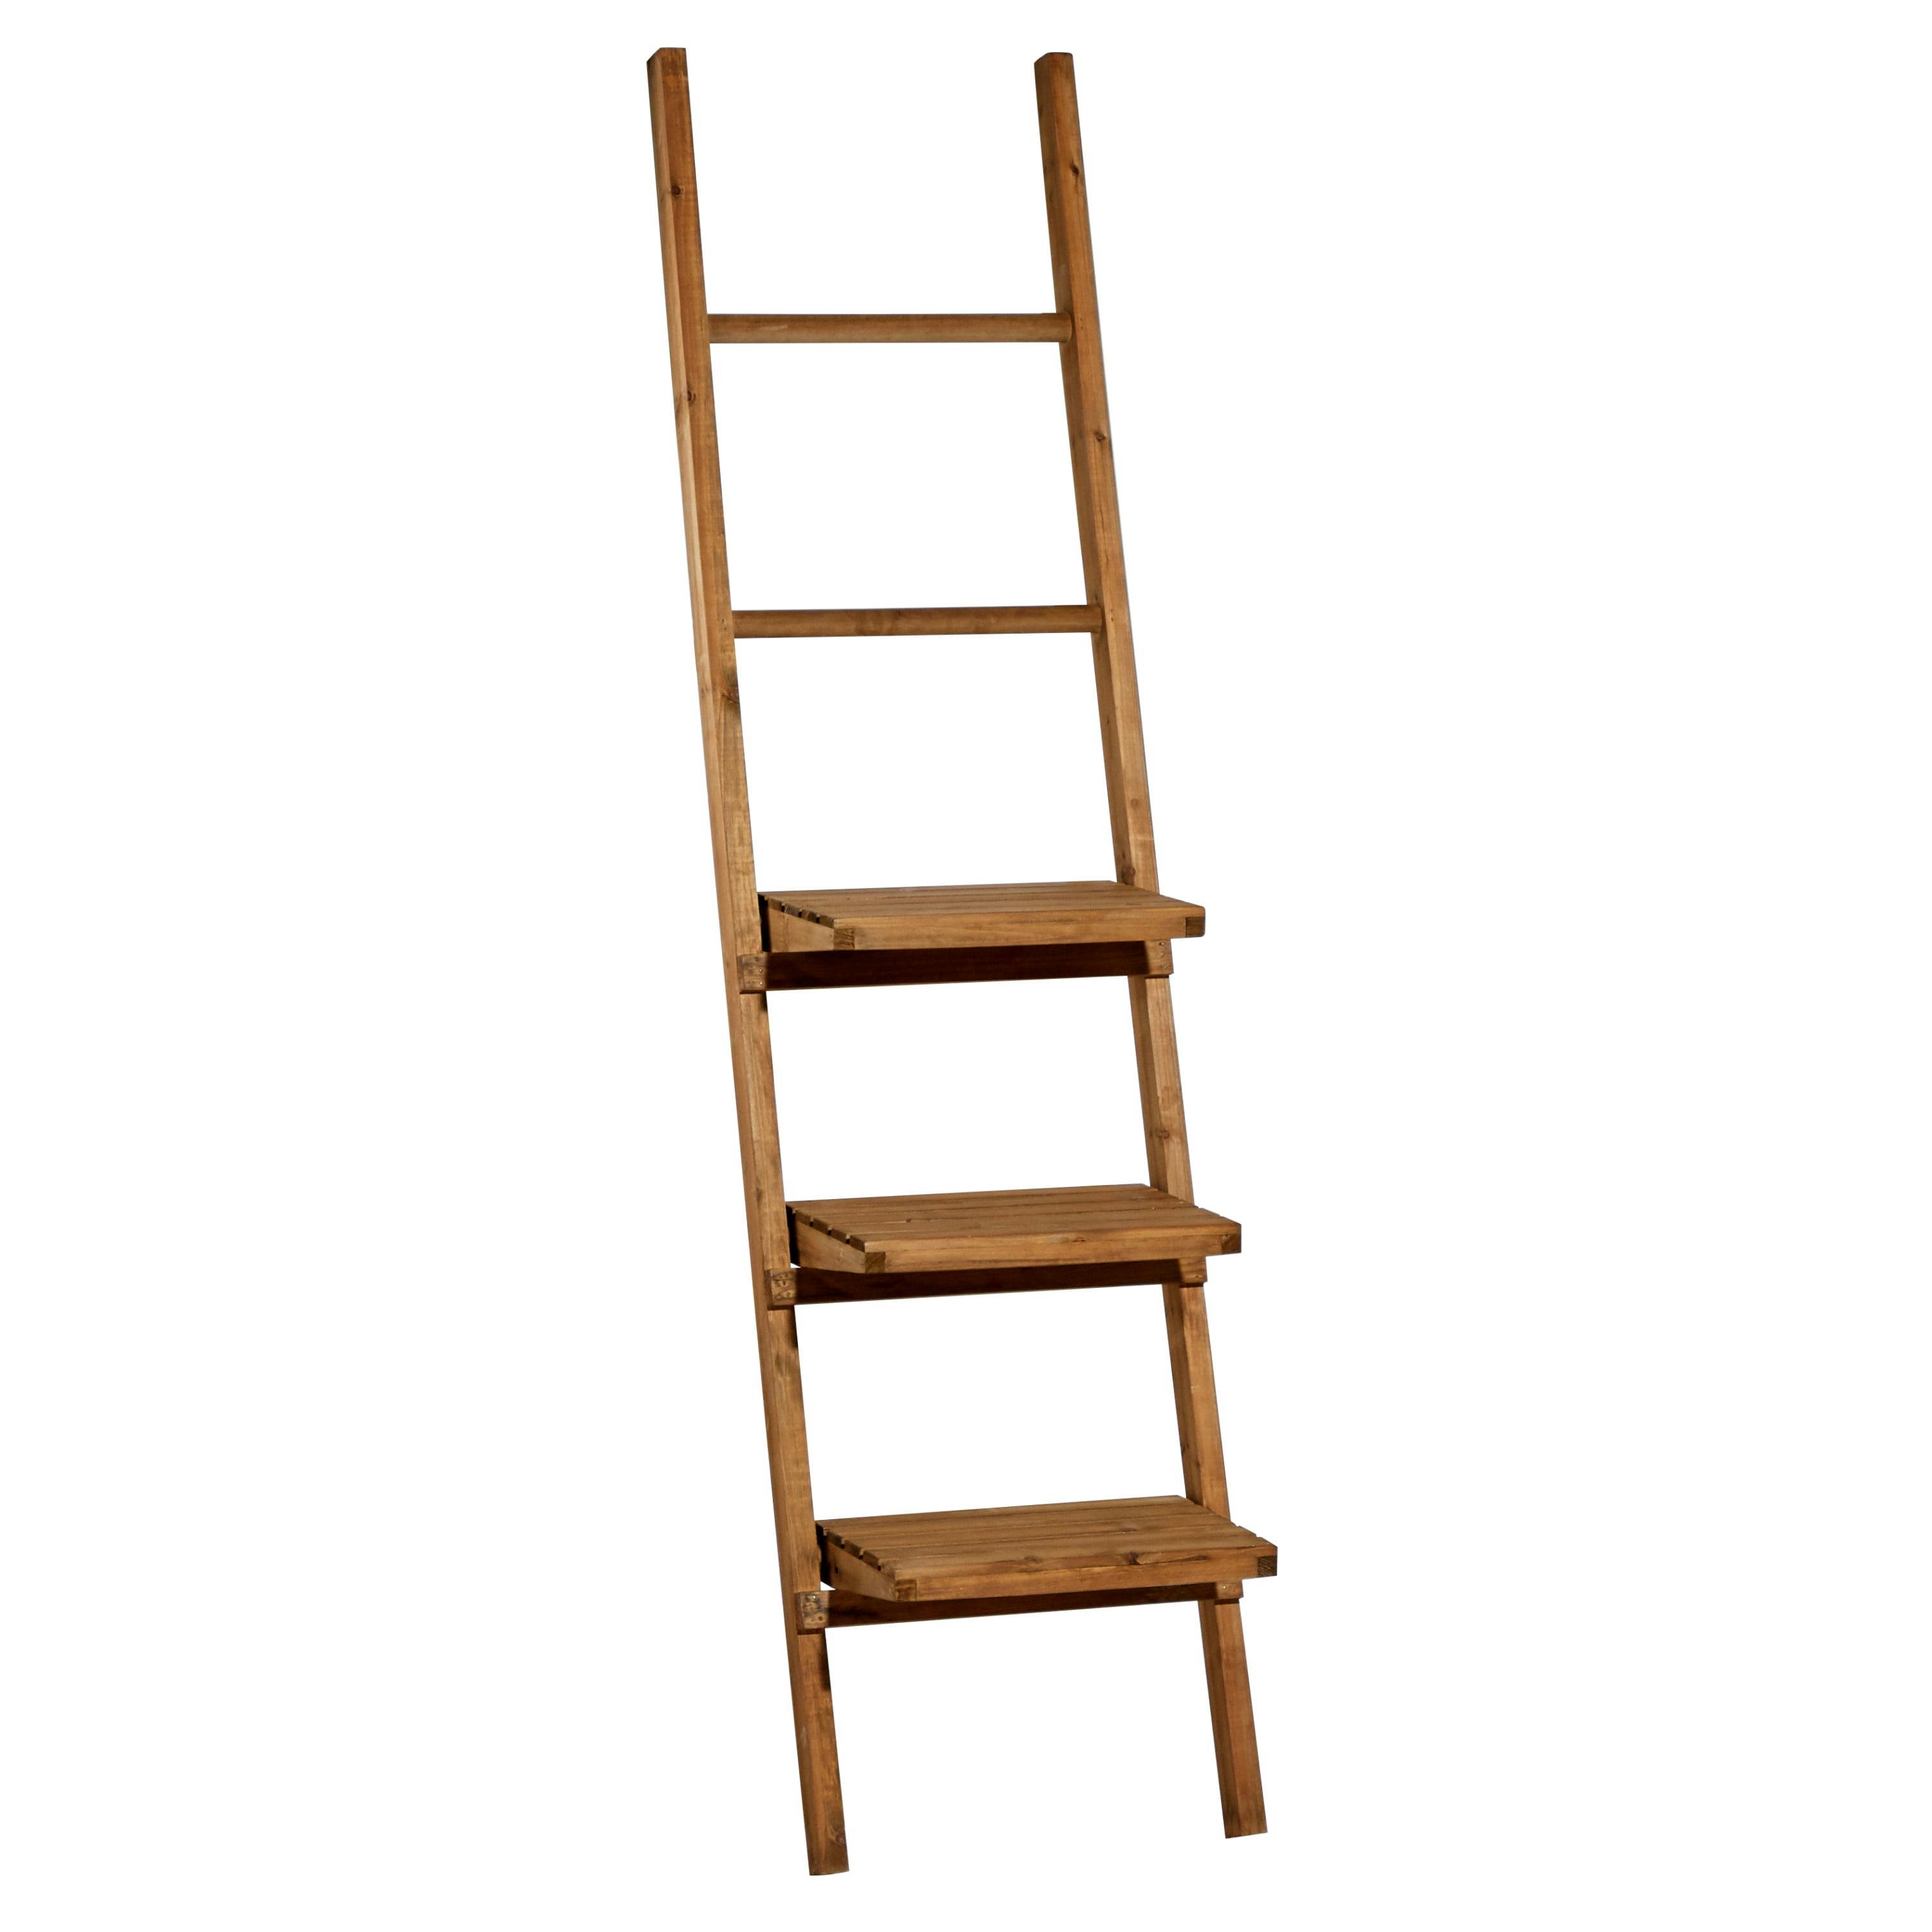 Rustic Farmhouse 5-Tier Leaning Ladder Shelf in Light Brown